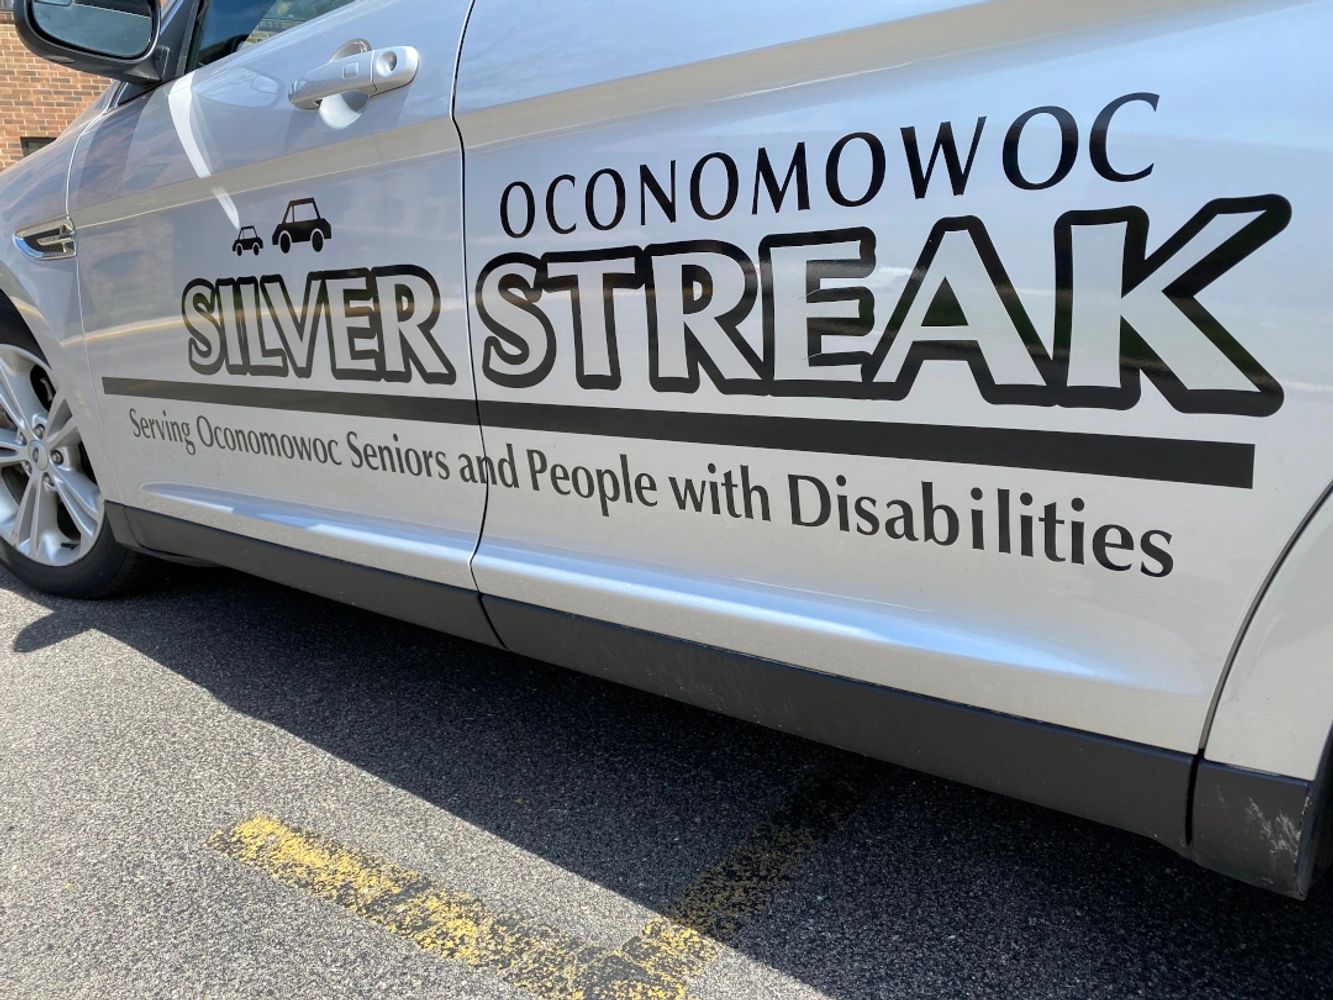 Oconomowoc Silver Streak car used to transport seniors age 60+ and ambulatory disabled adults.